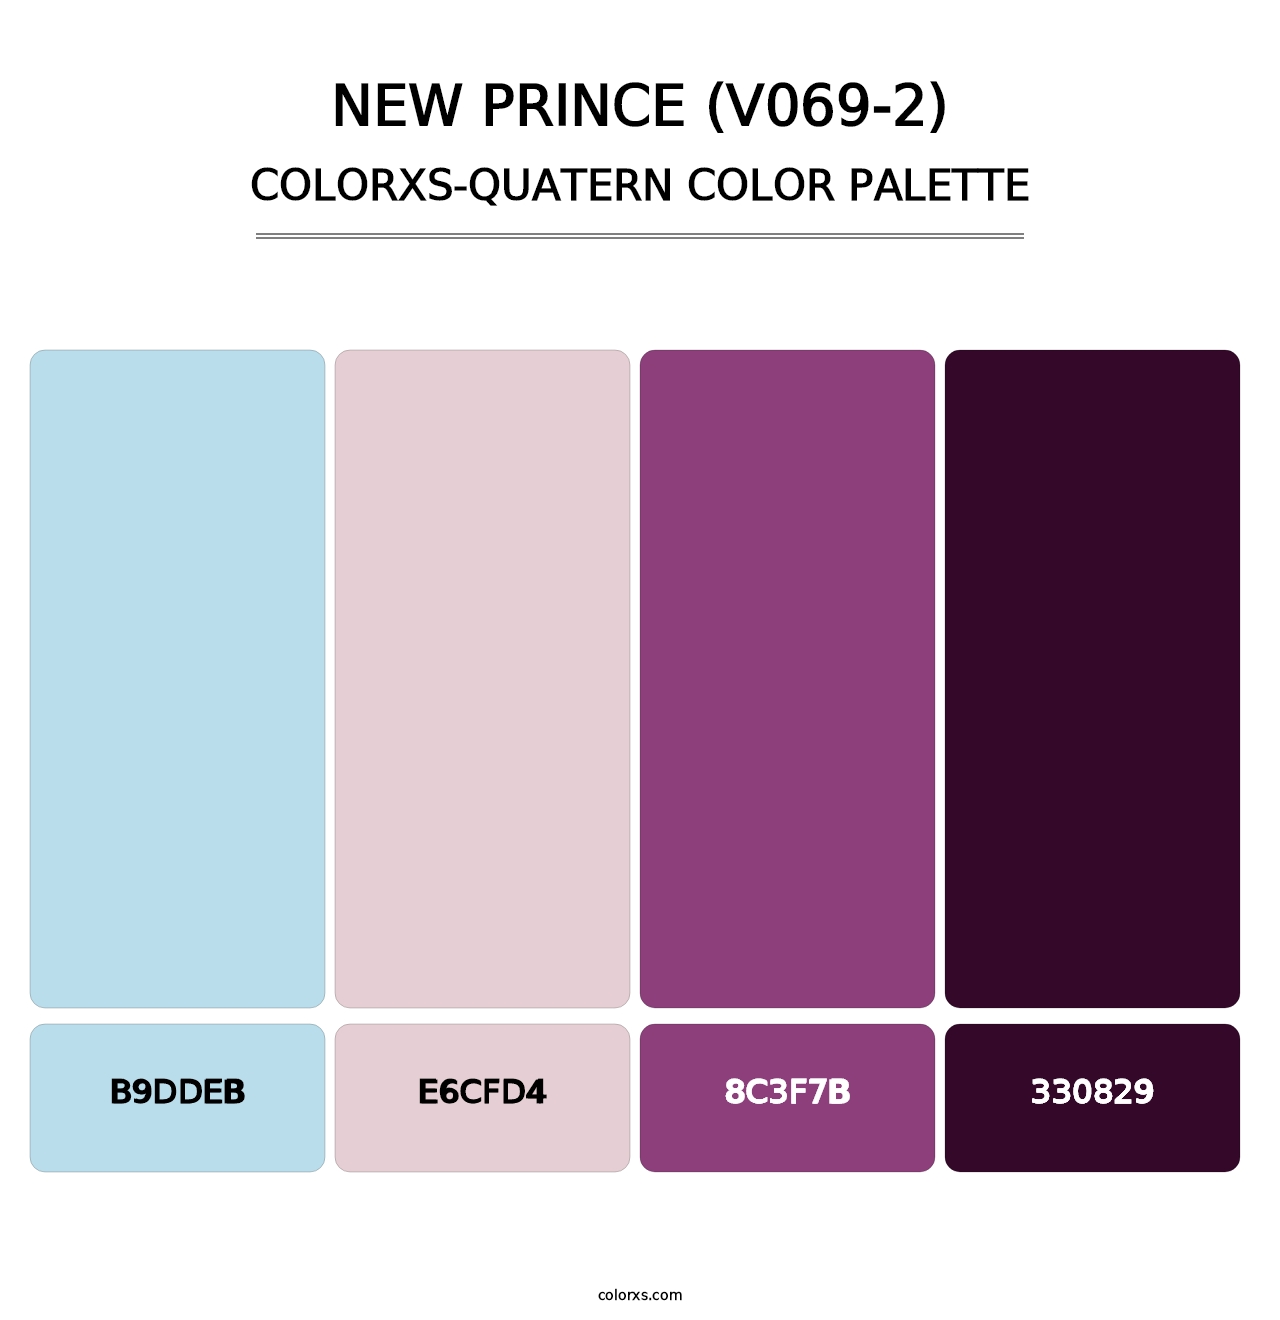 New Prince (V069-2) - Colorxs Quatern Palette